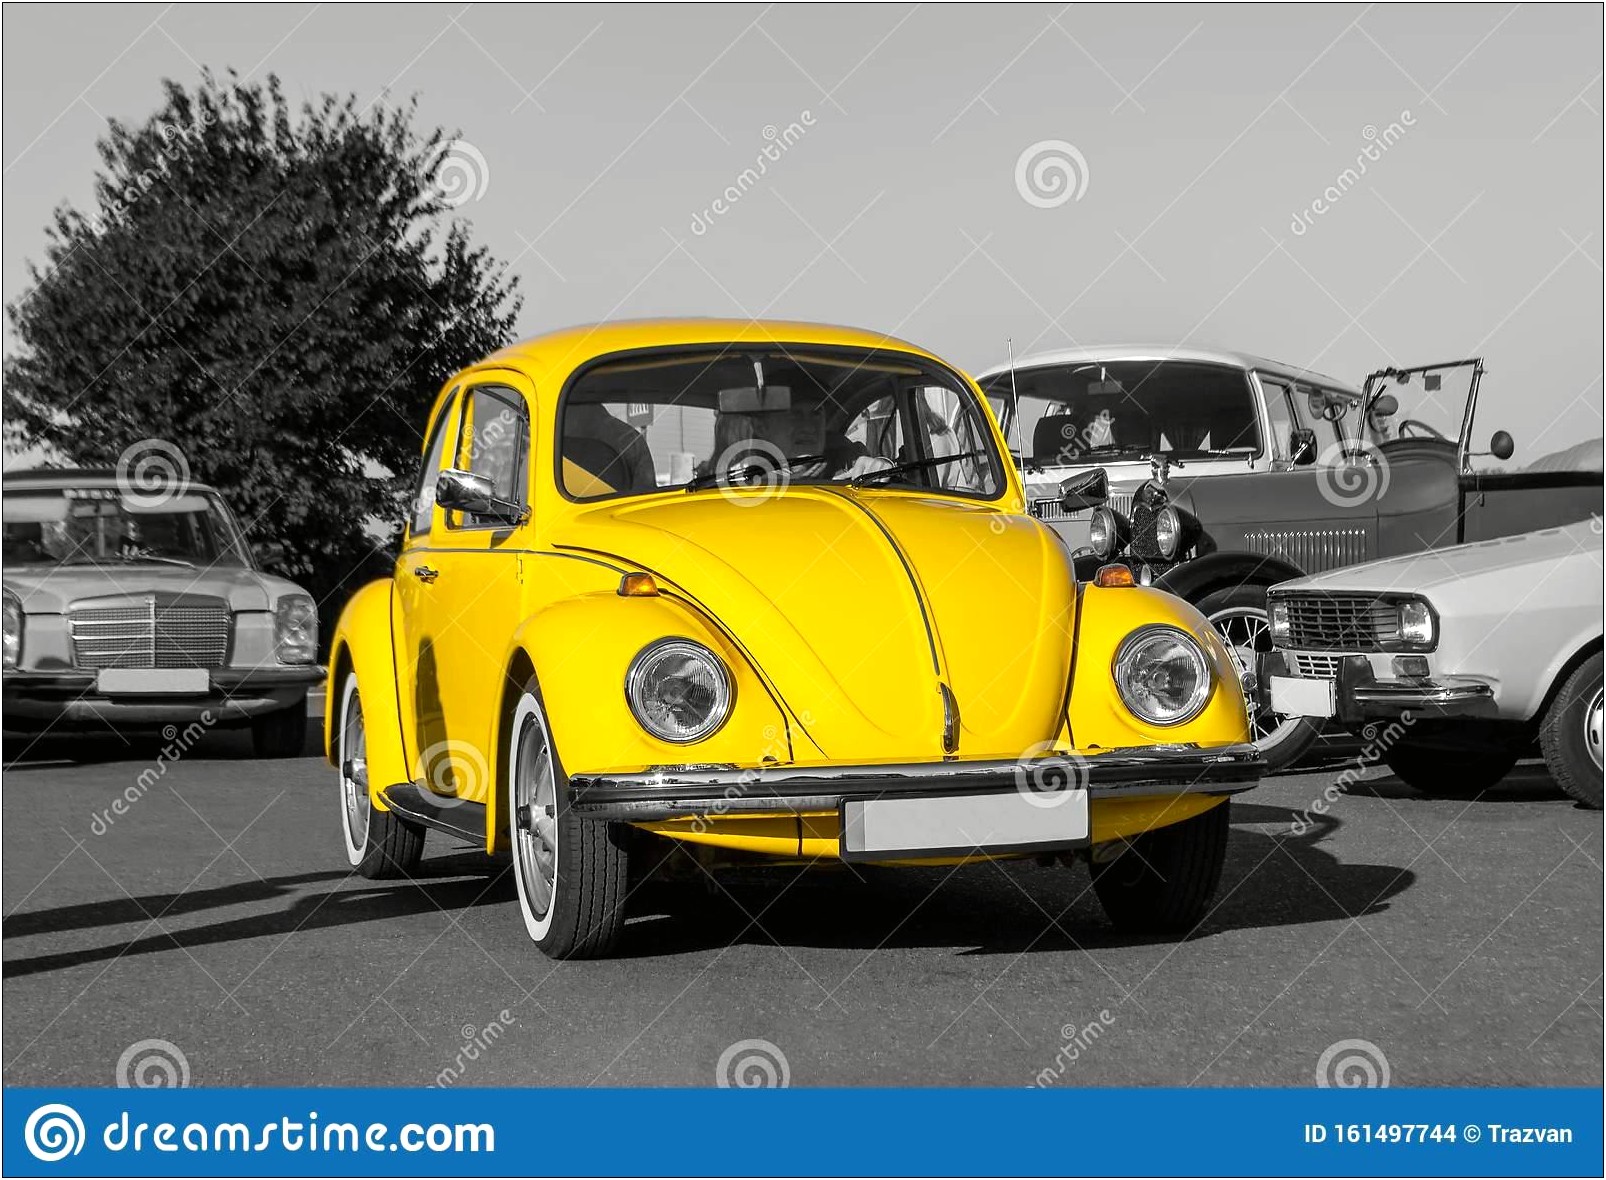 1969 Vw Beetle Free Vehicle Template